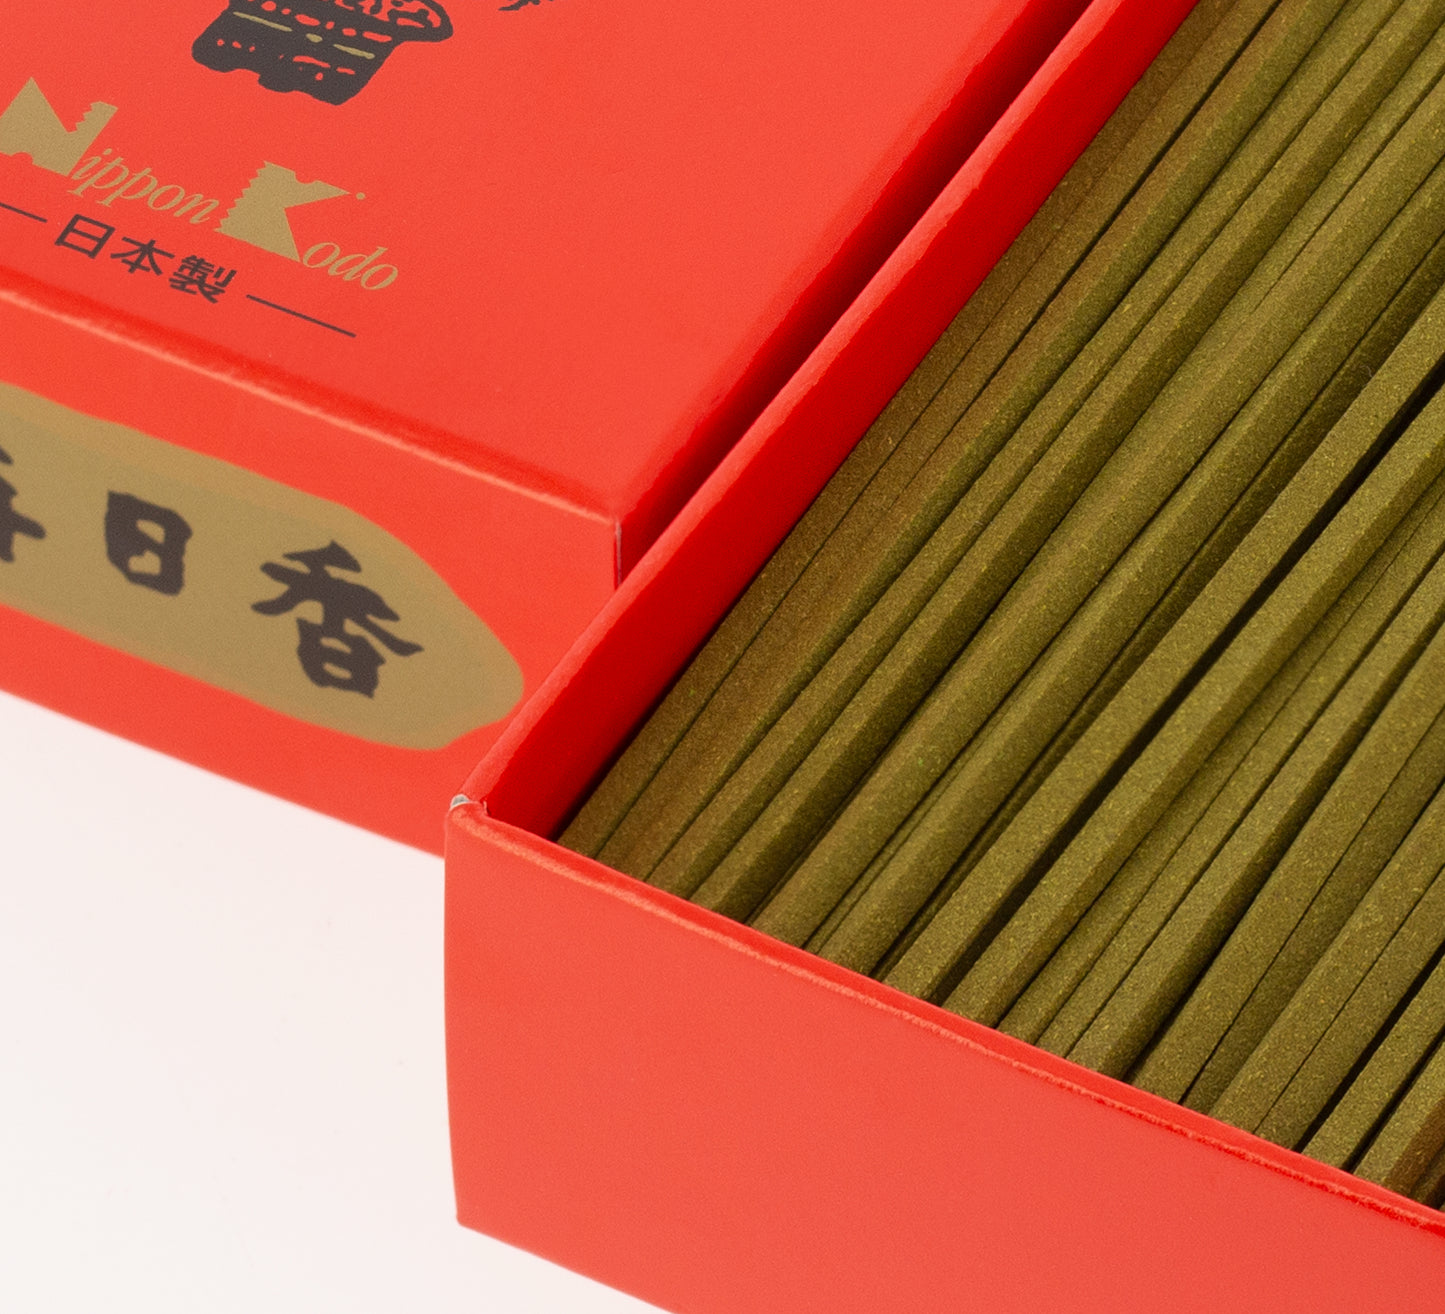 Shin Mainichikoh Incense - Sandalwood, 80 g